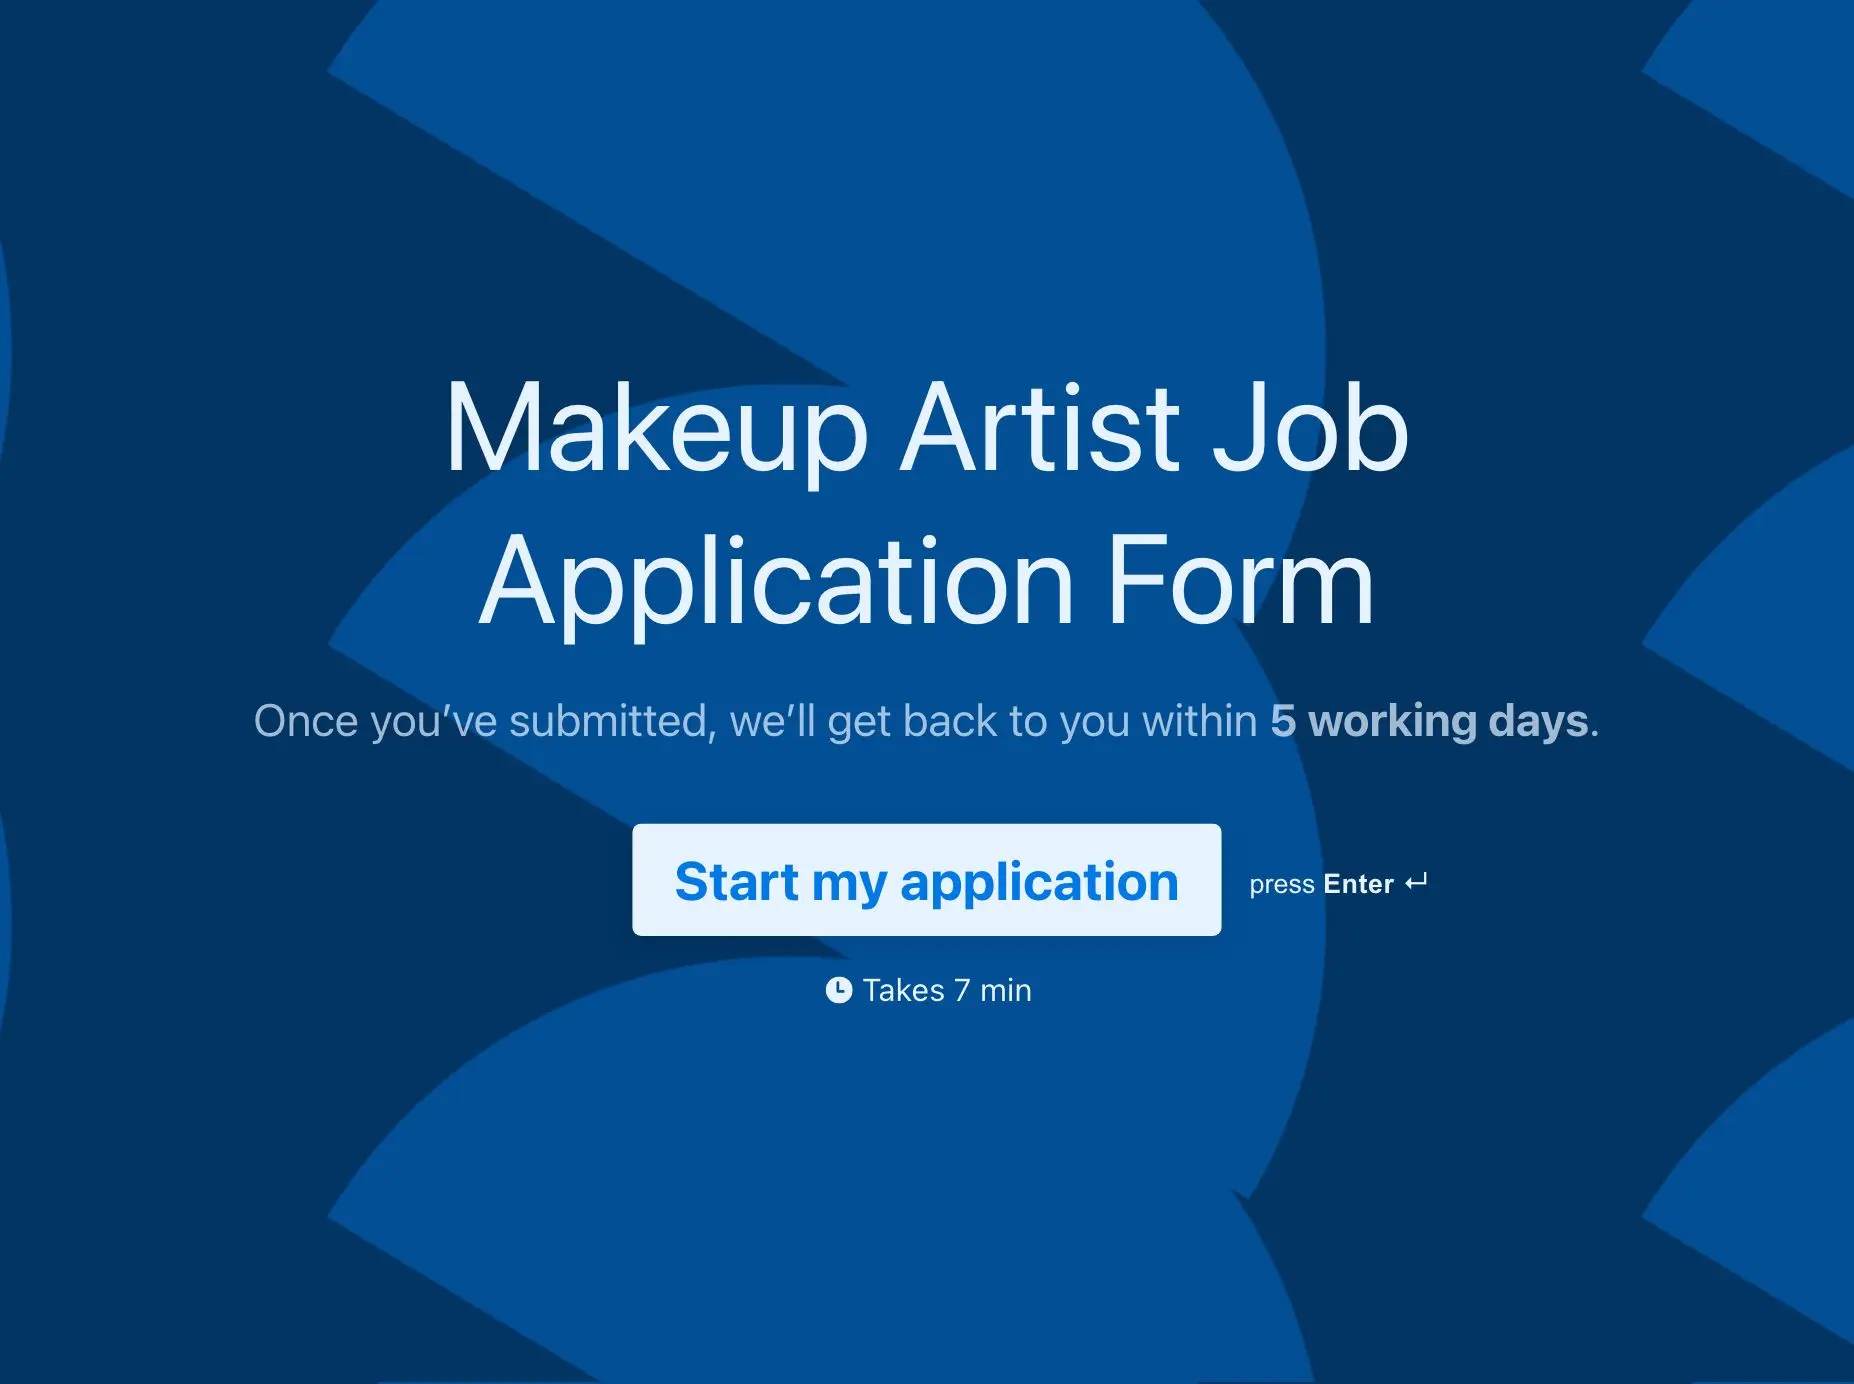 Makeup Artist Job Application Form Template Hero